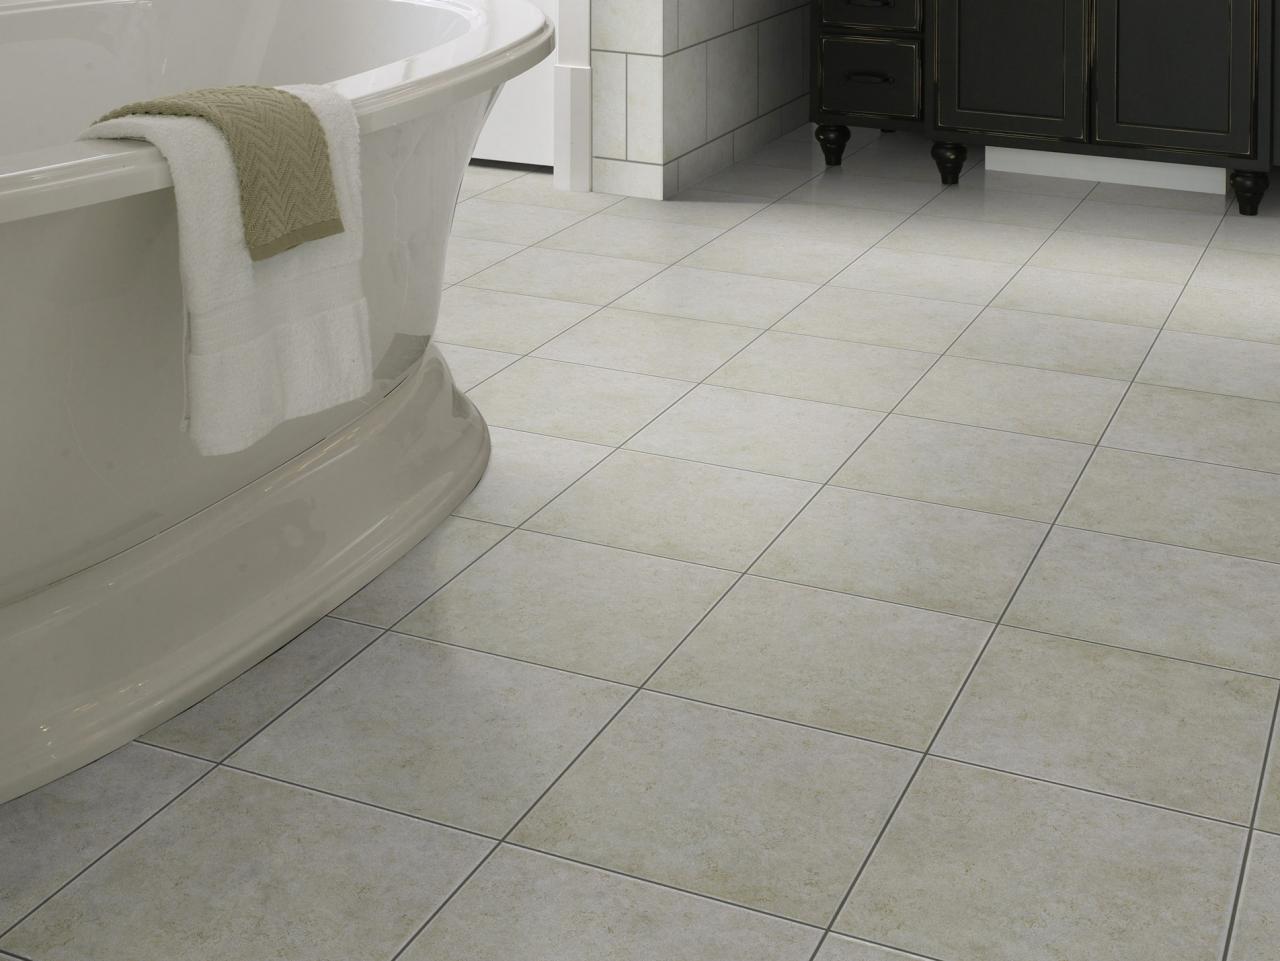 Why Homeowners Love Ceramic Tile, Ceramic Tile Flooring Cost Per Sq Ft